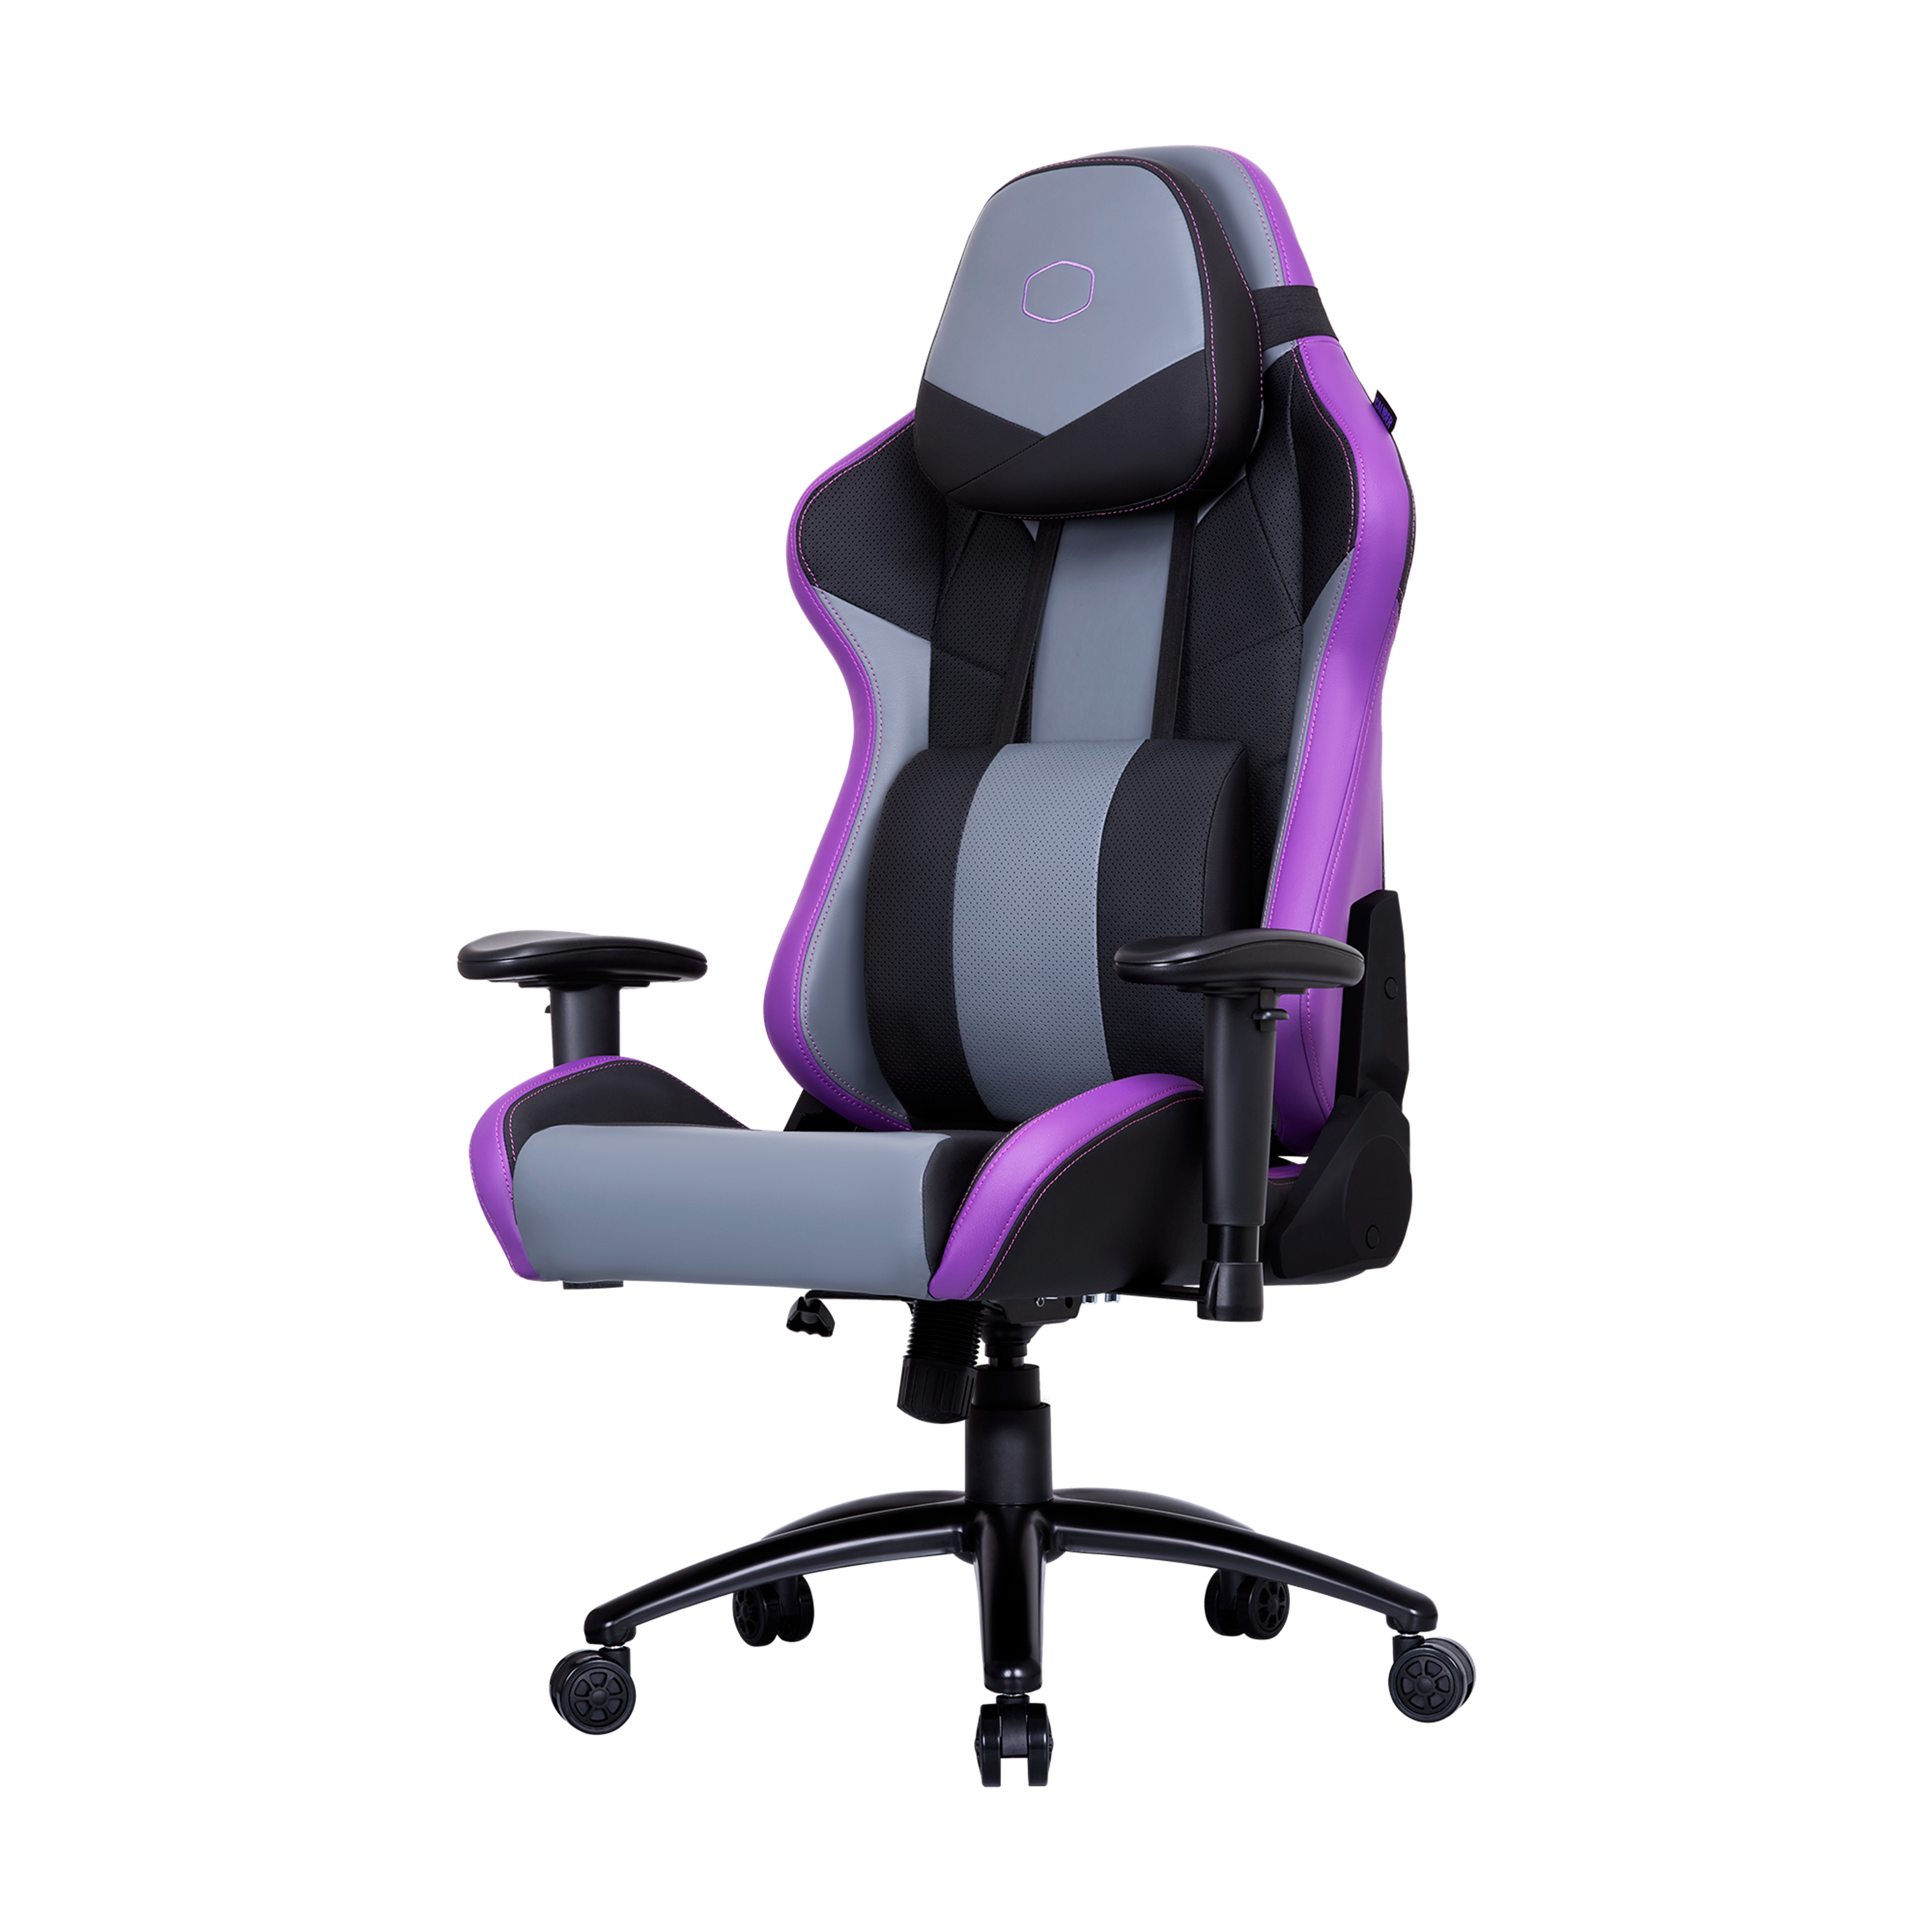 COUGAR Armor Pro - Chair - ergonomic - recliner - high-back - armrests -  T-shaped - tilt - swivel - steel frame, premium PVC leather - black 